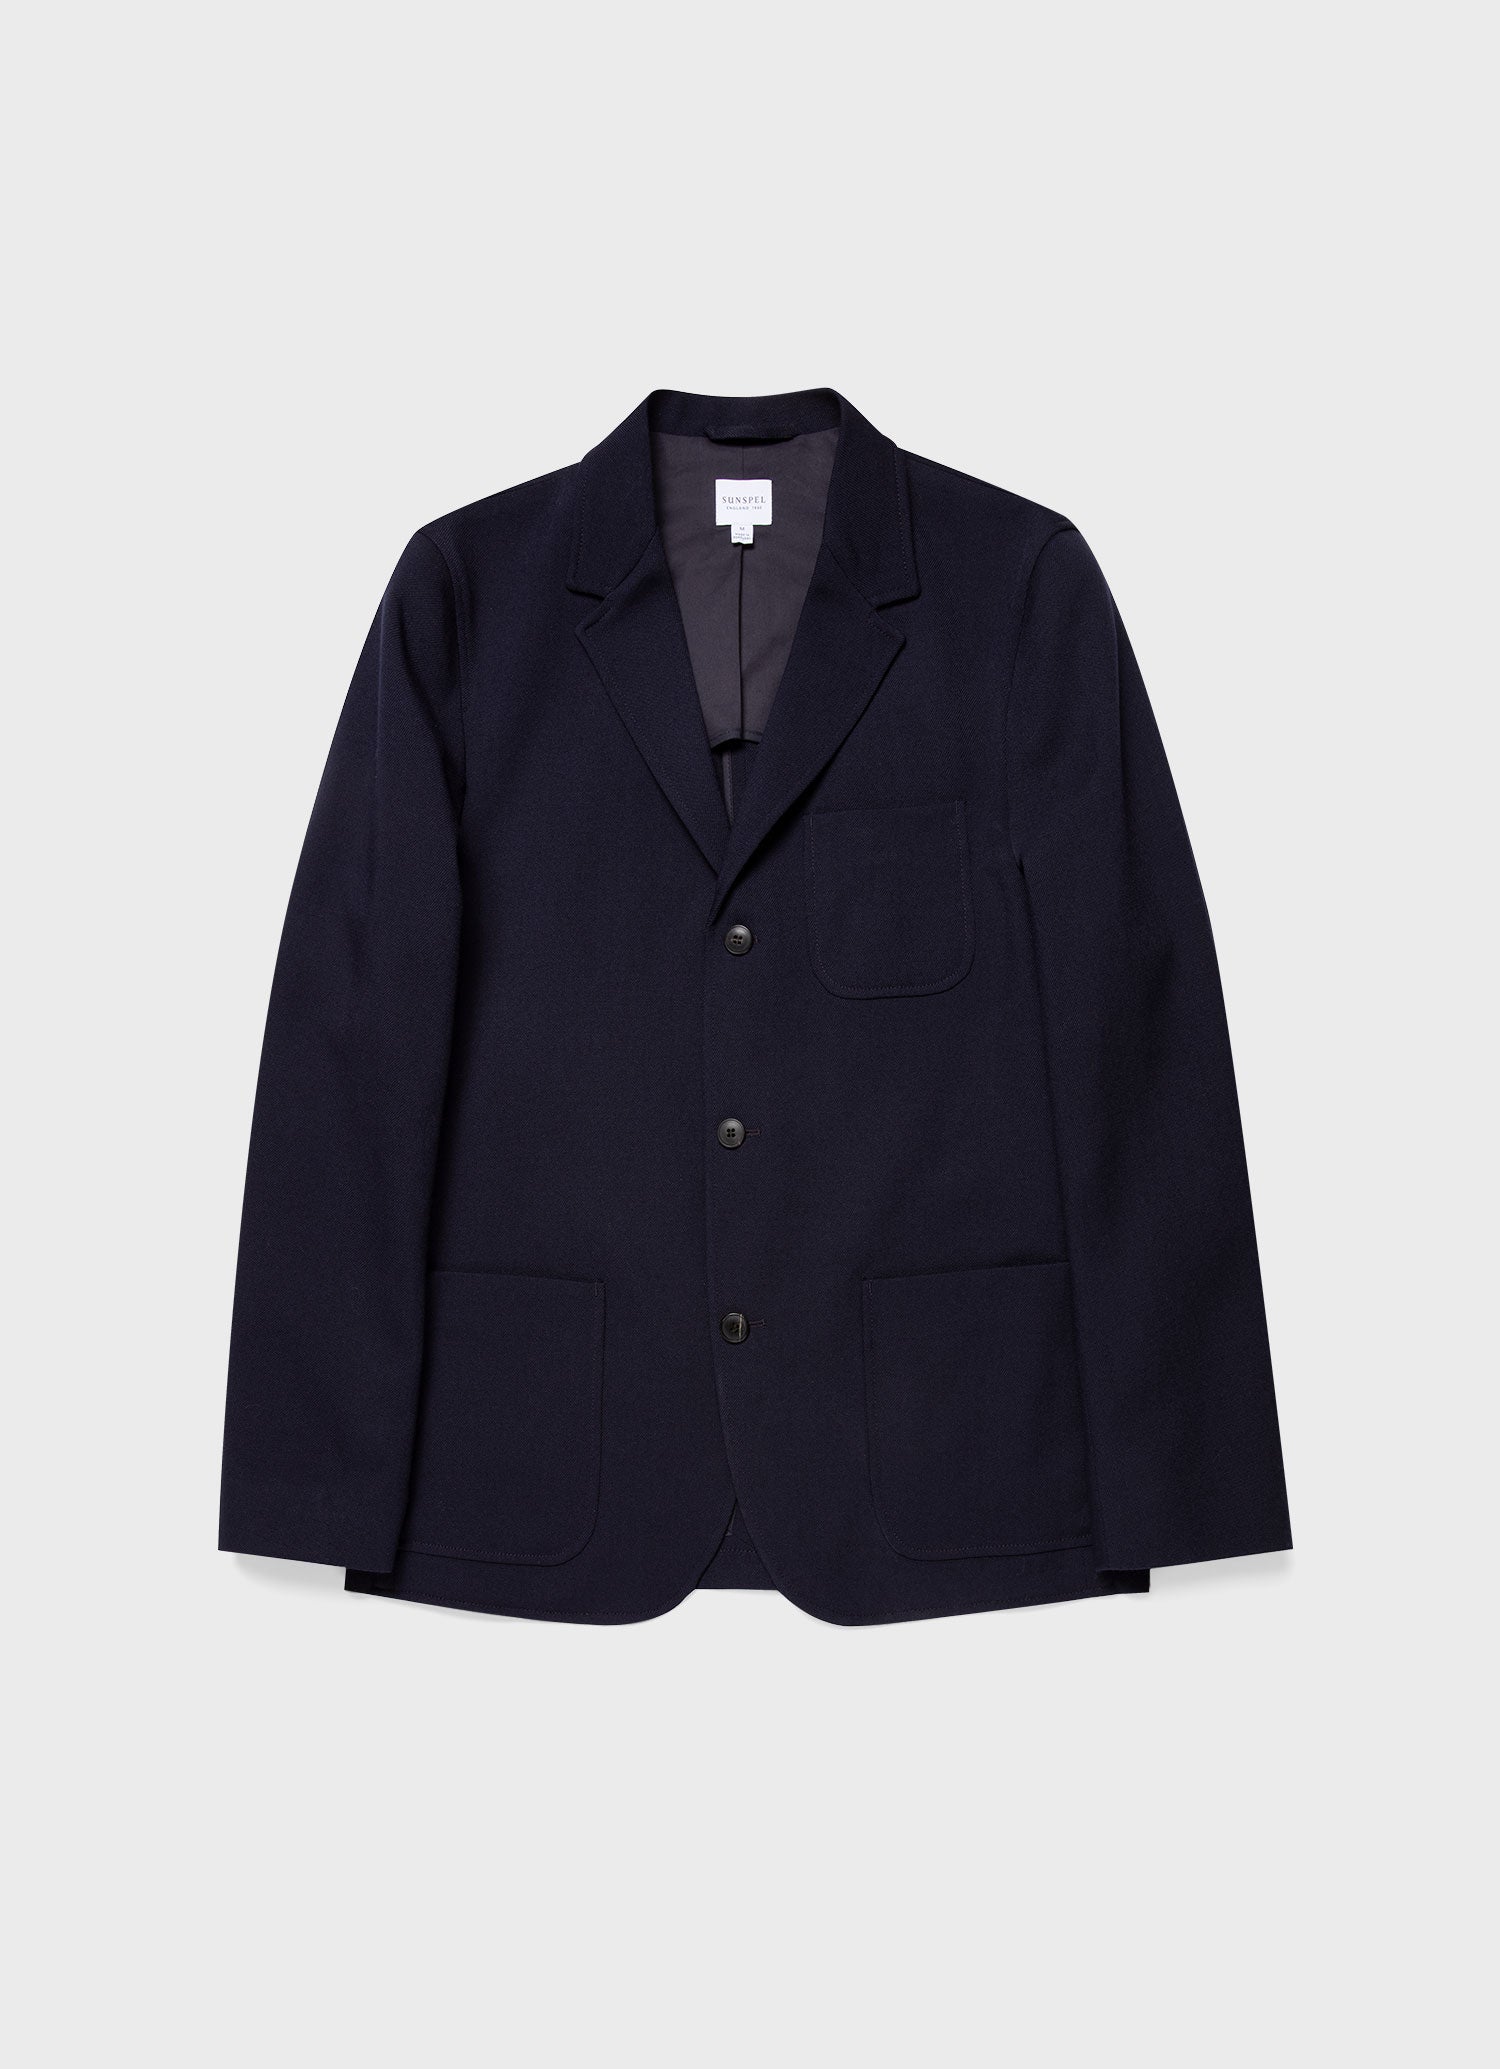 Men's Jackets & Coats | Sunspel